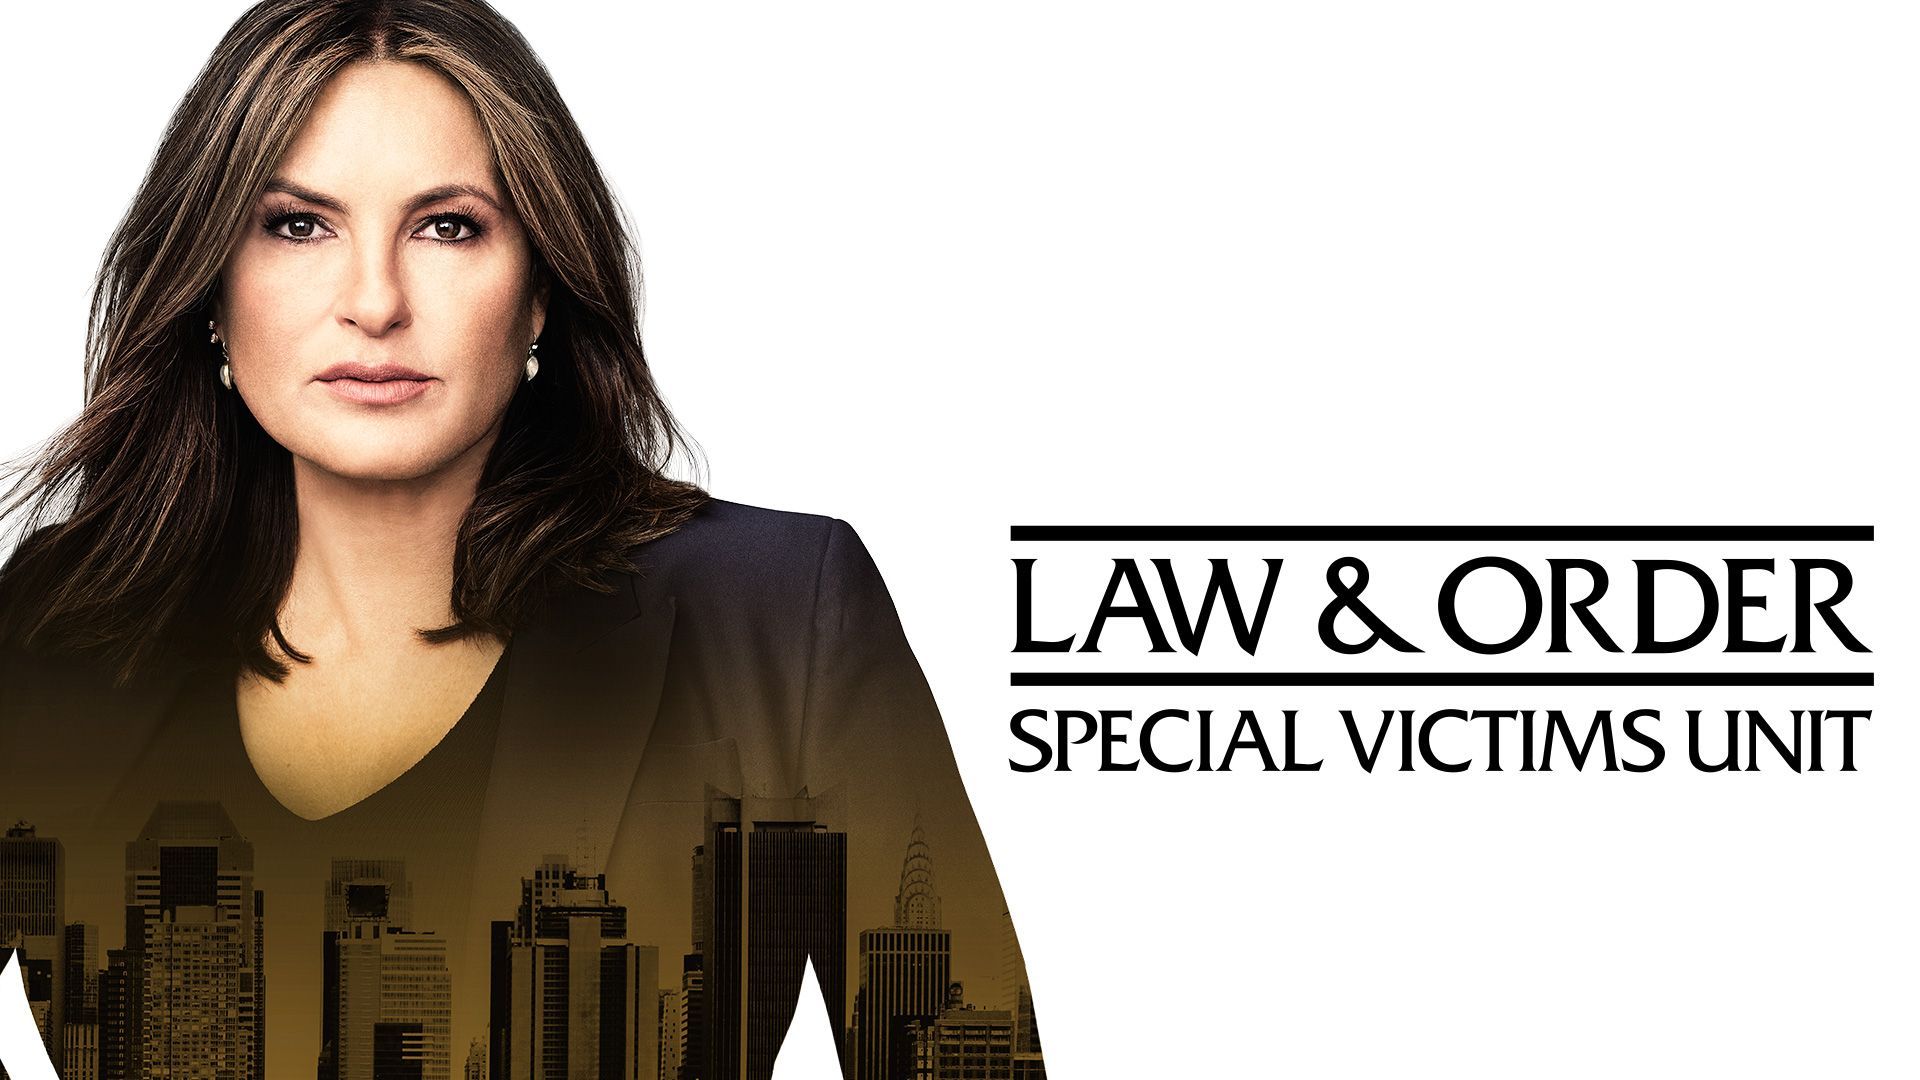 'Law and Order: SVU' on Hulu